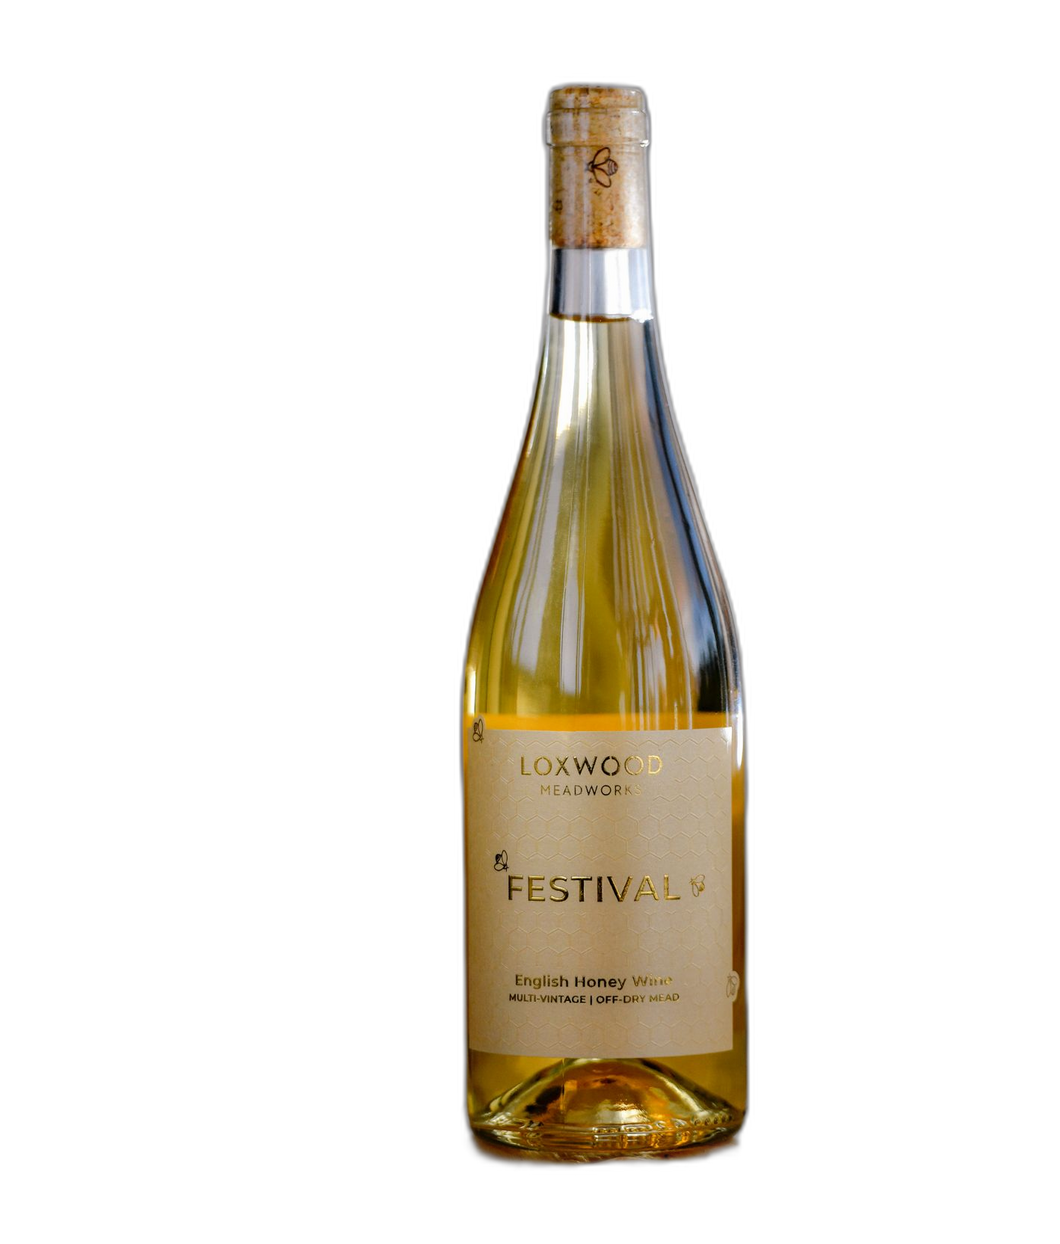 Loxwood Meadworks 'Festival' English Honey Wine